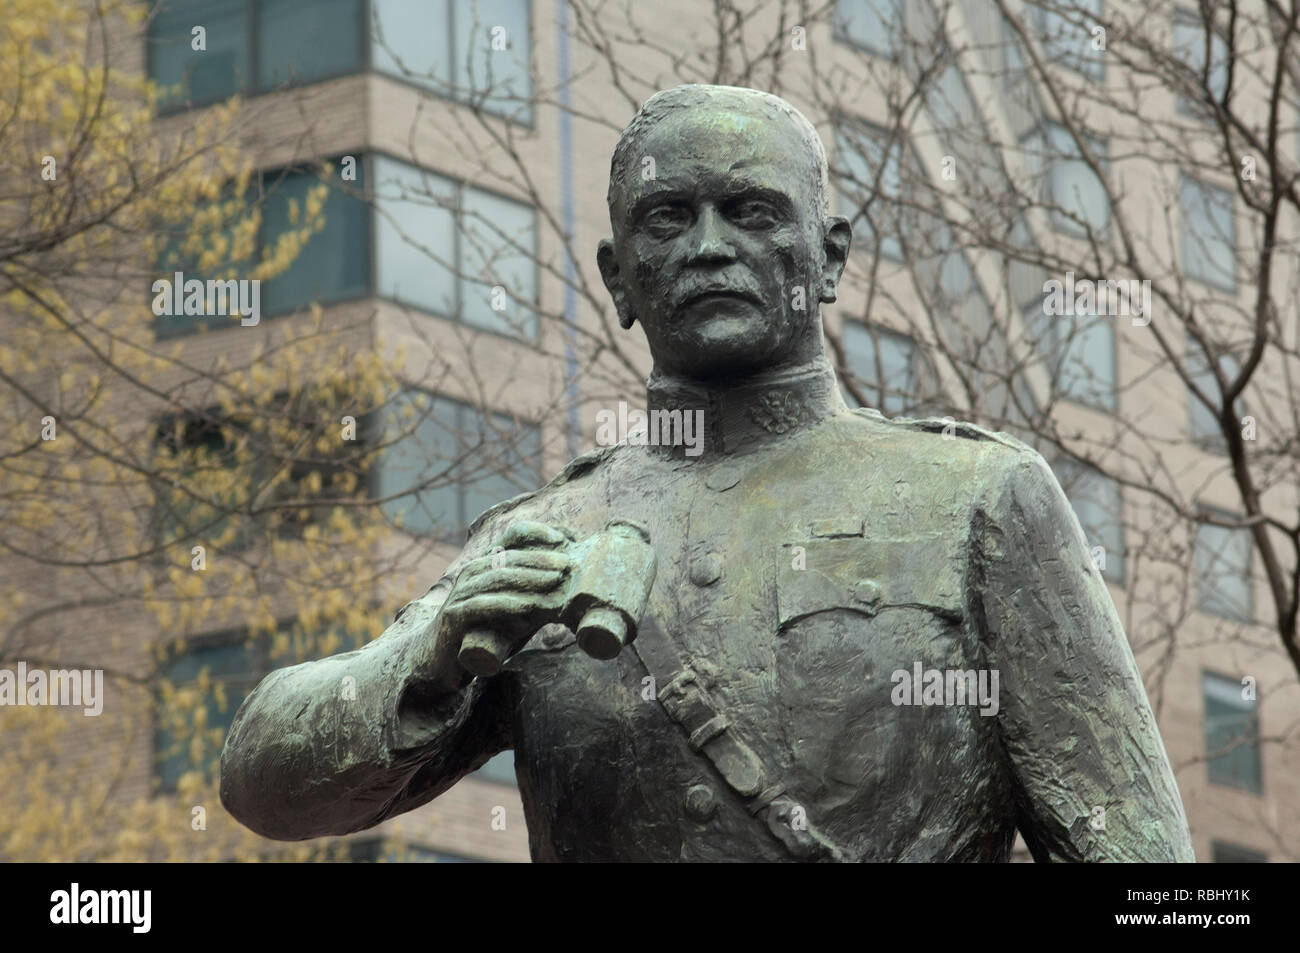 Statue of World War I US Army General John J. Pershing, Washington, DC. Digital photograph Stock Photo